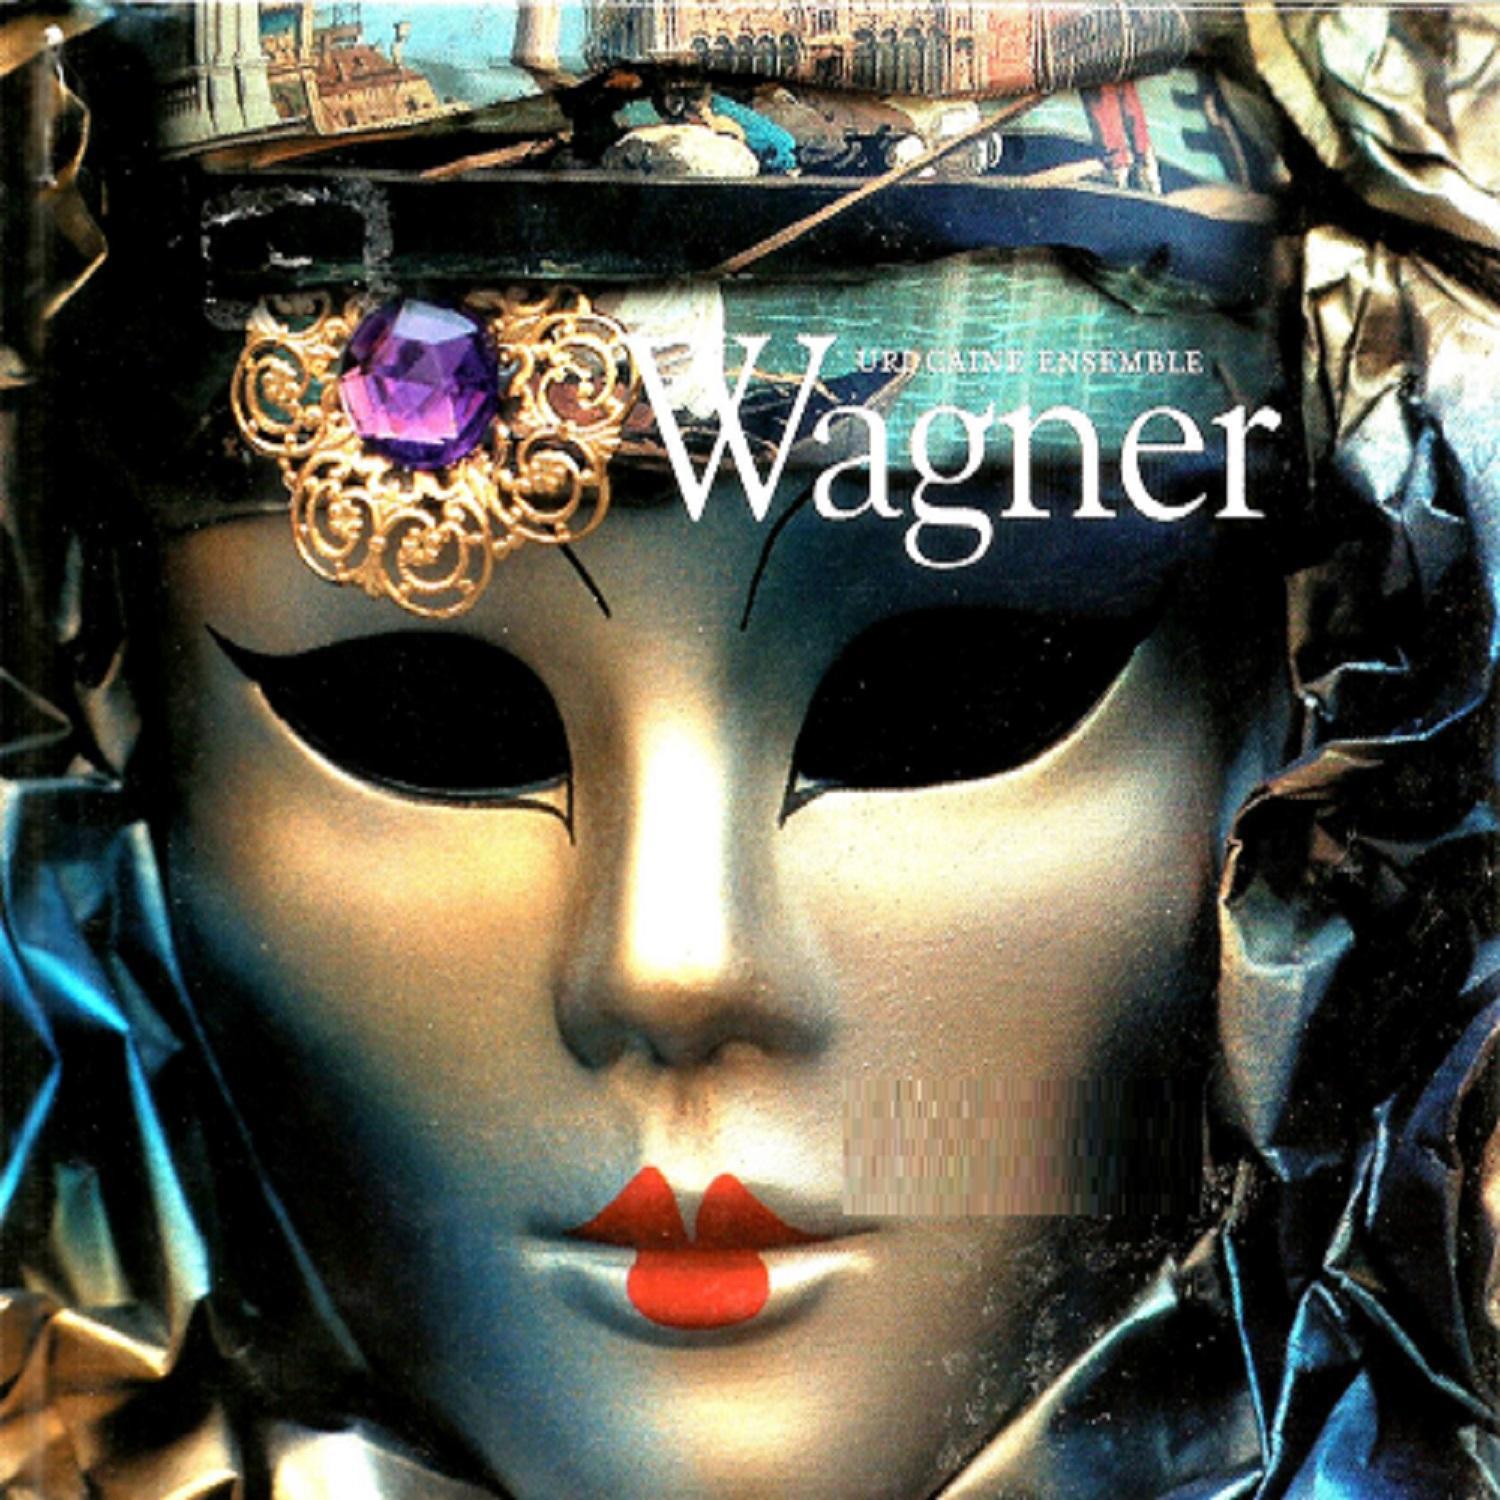 Uri Caine Ensemble, Wagner